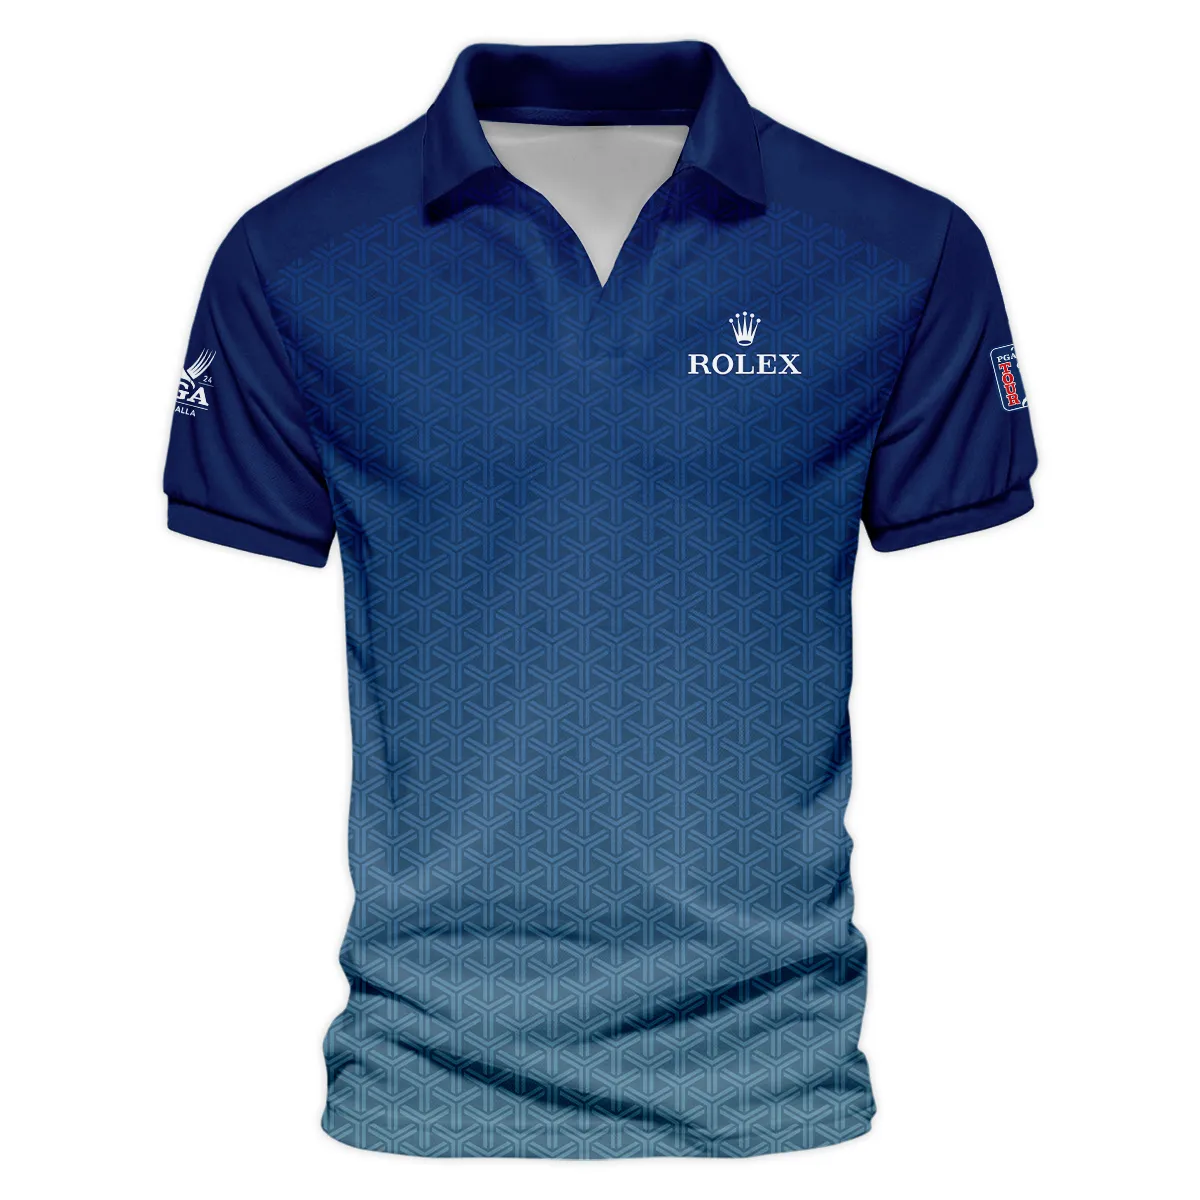 Golf Sport Pattern Blue Sport Uniform 2024 PGA Championship Valhalla Rolex Polo Shirt Style Classic